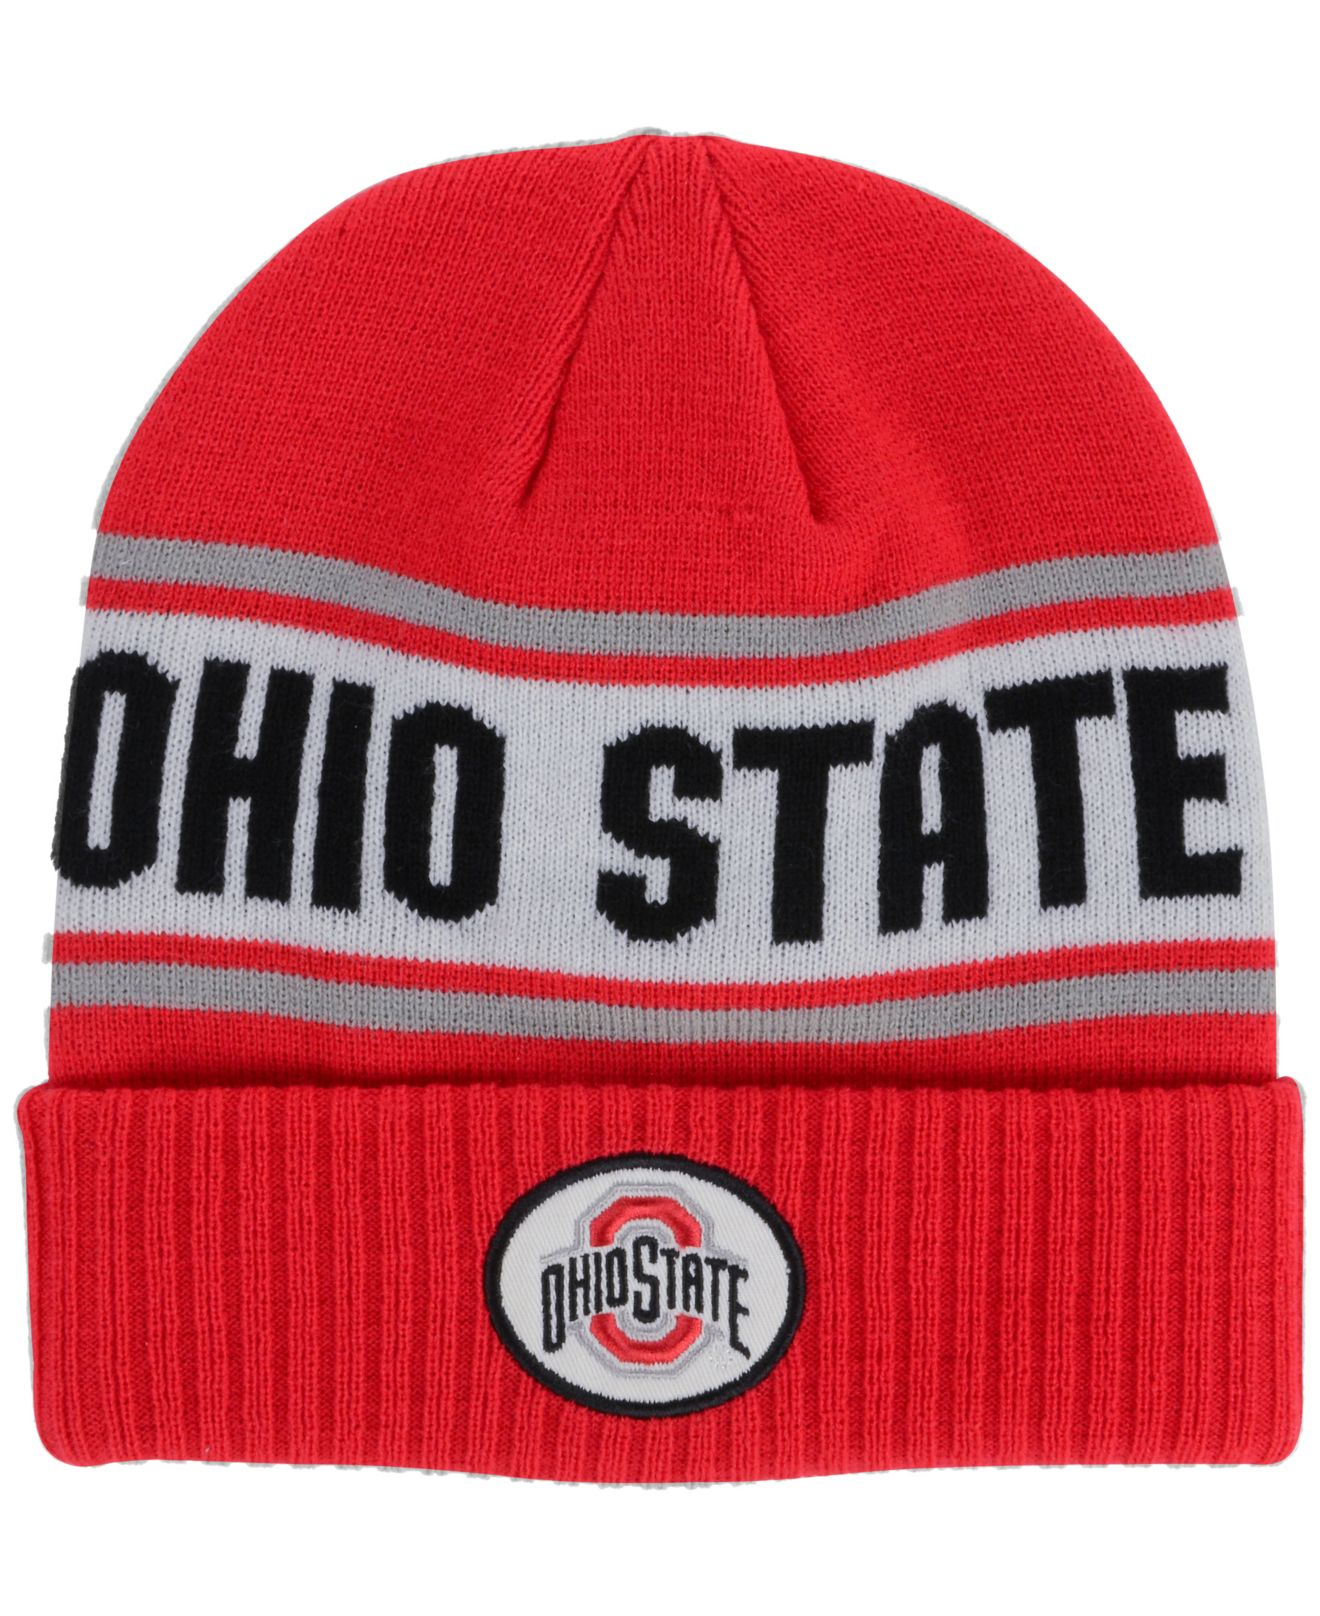 Ohio State Buckeyes Sideline Knit Hat 